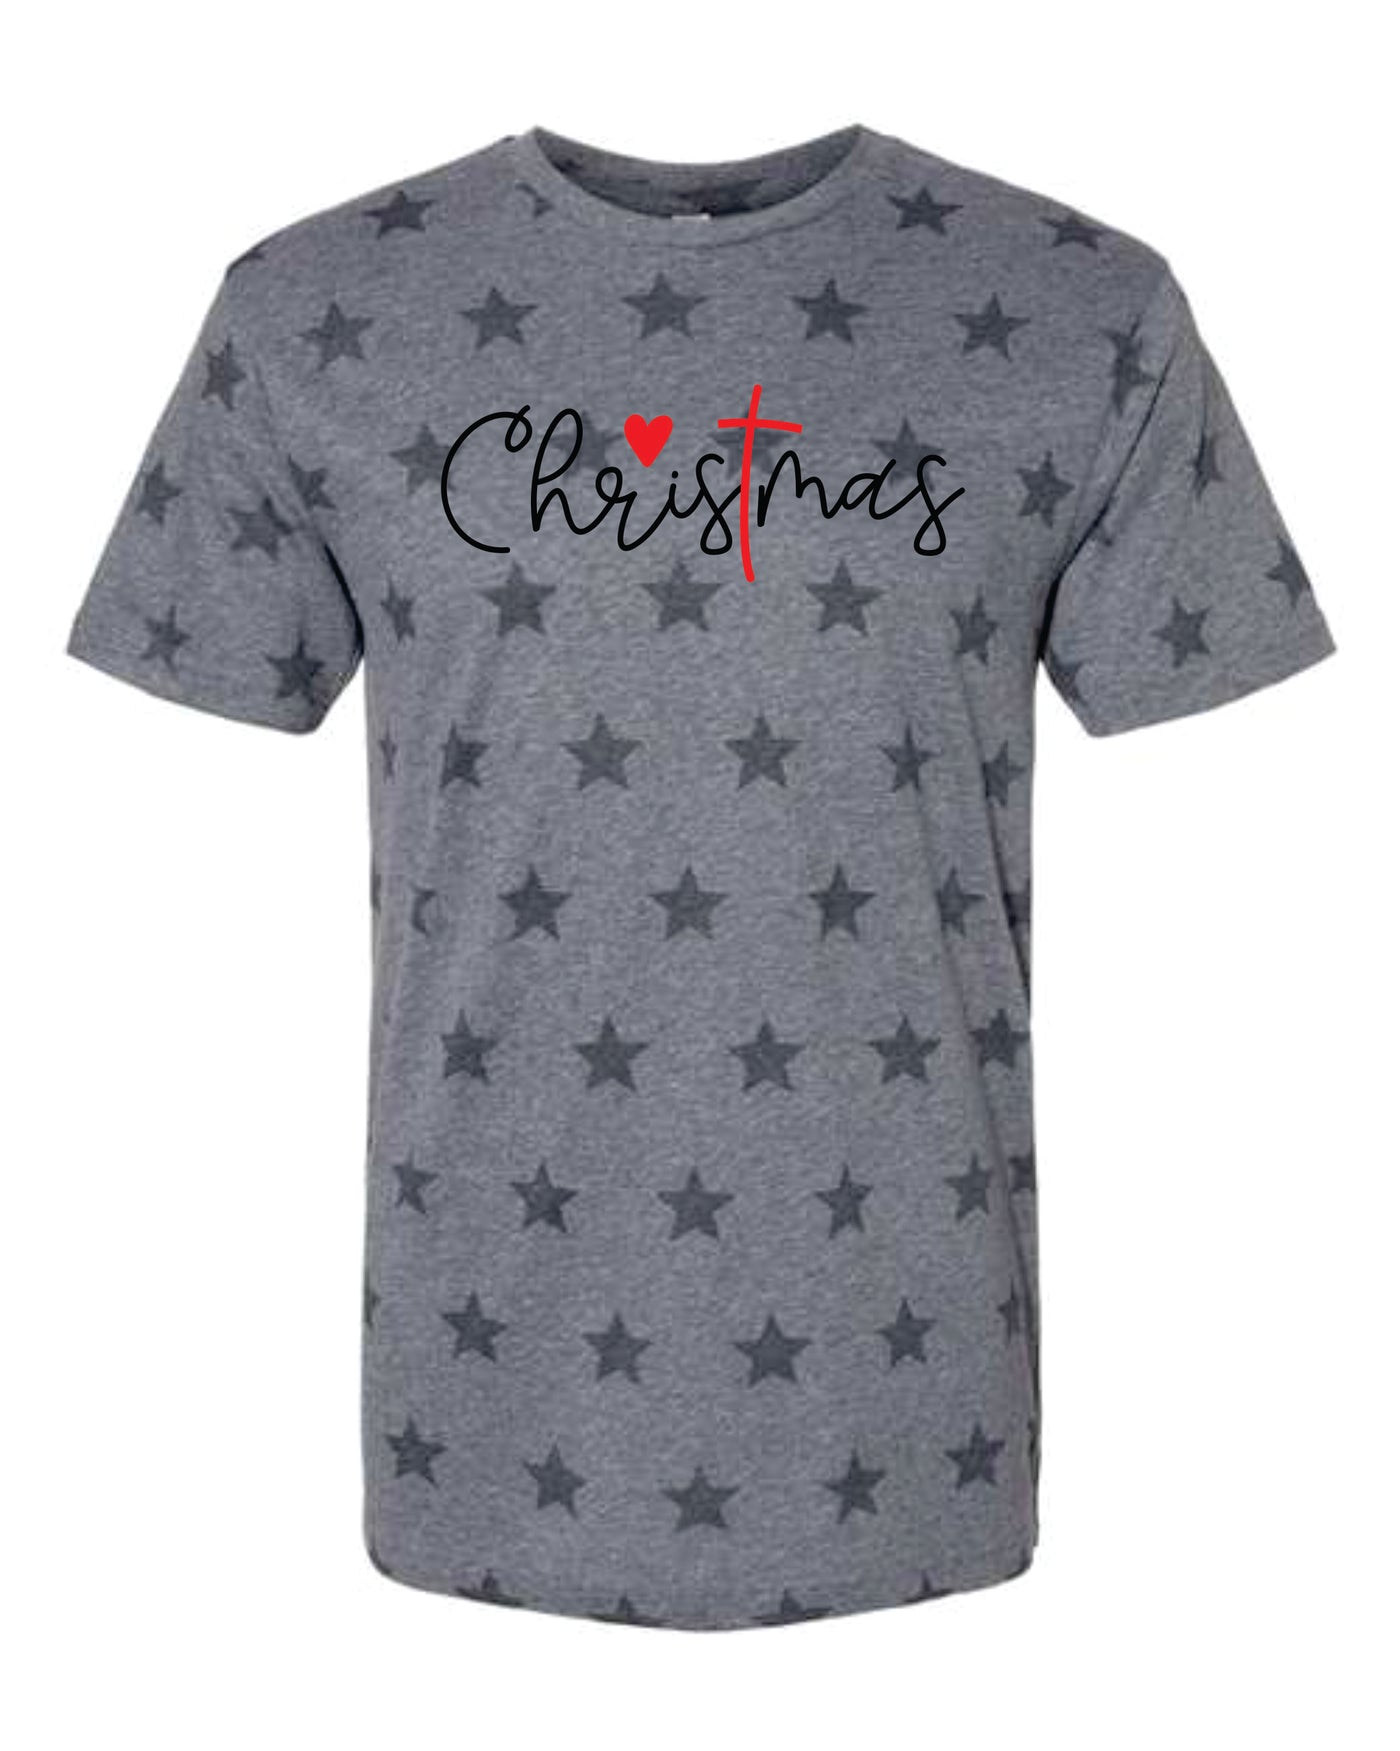 Christmas with Cross Star Short Sleeve T-shirt